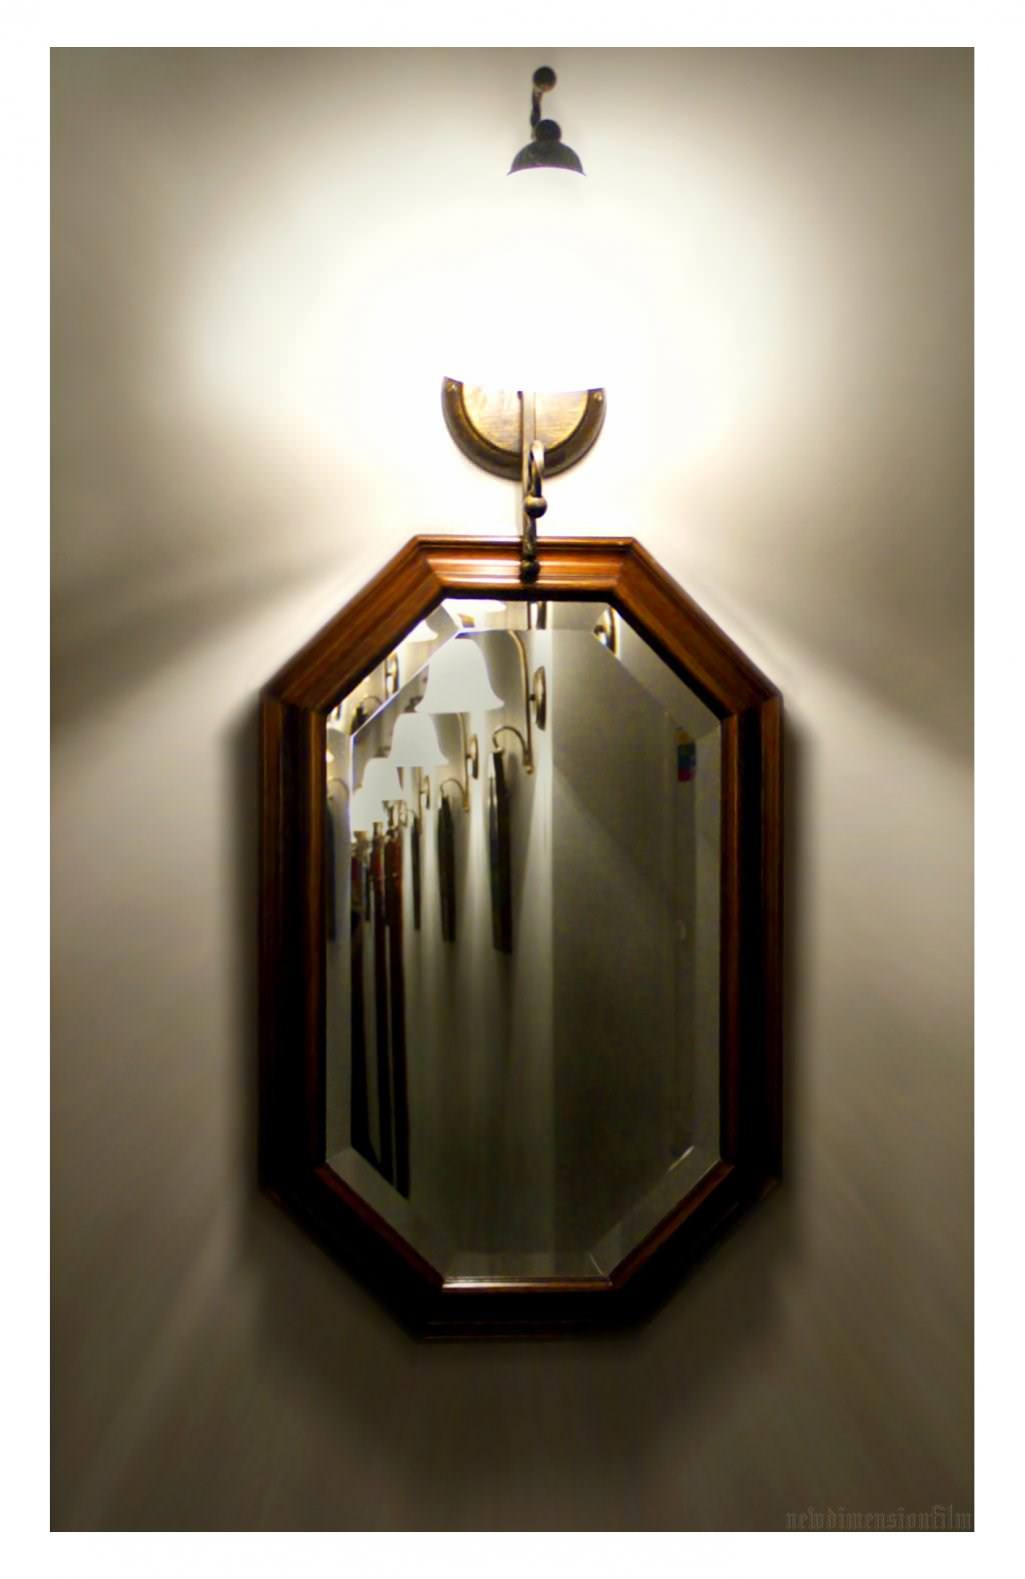 Interieur  miroir 2.